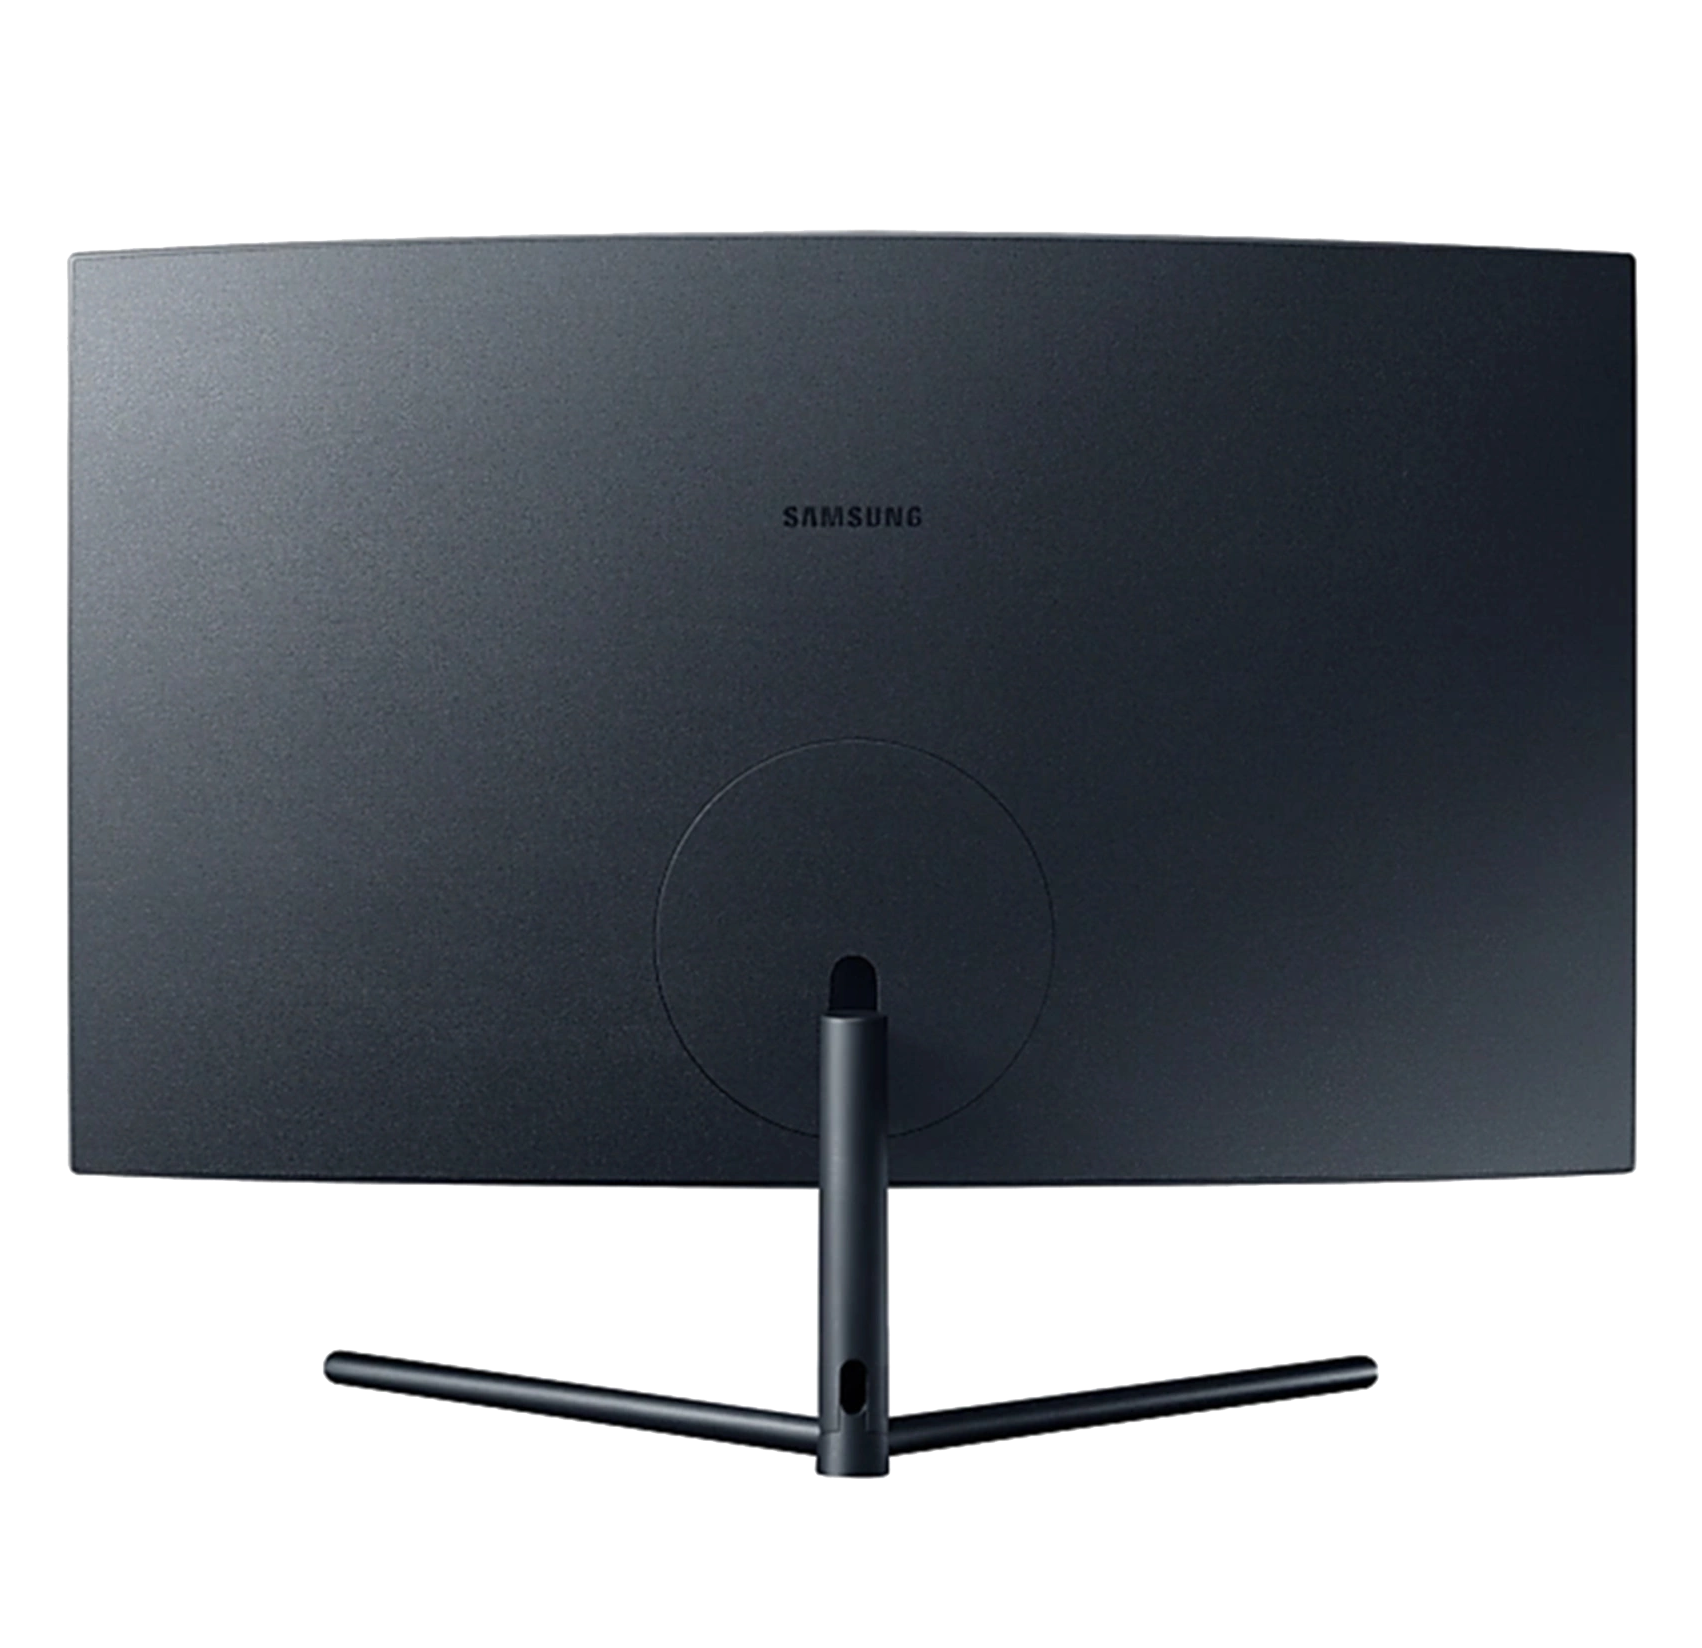 Samsung U32R590 32" UHD 4K VA 60Hz Professional Curved Monitor